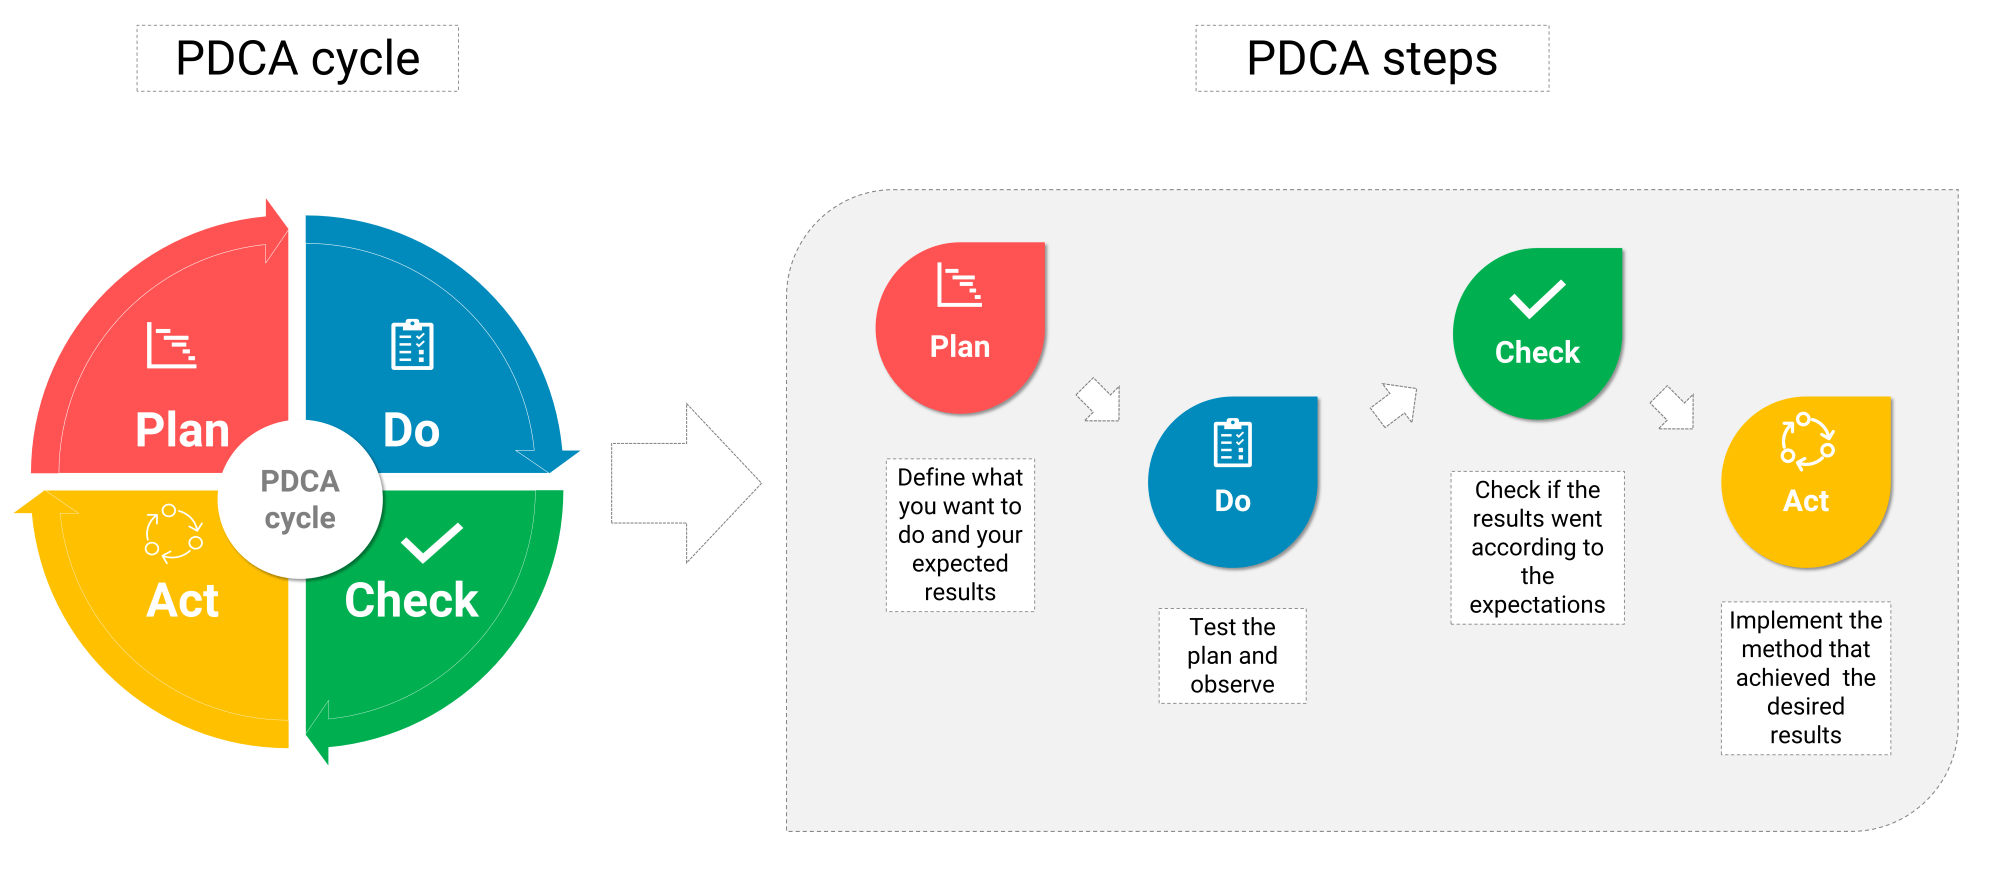 PDCA steps